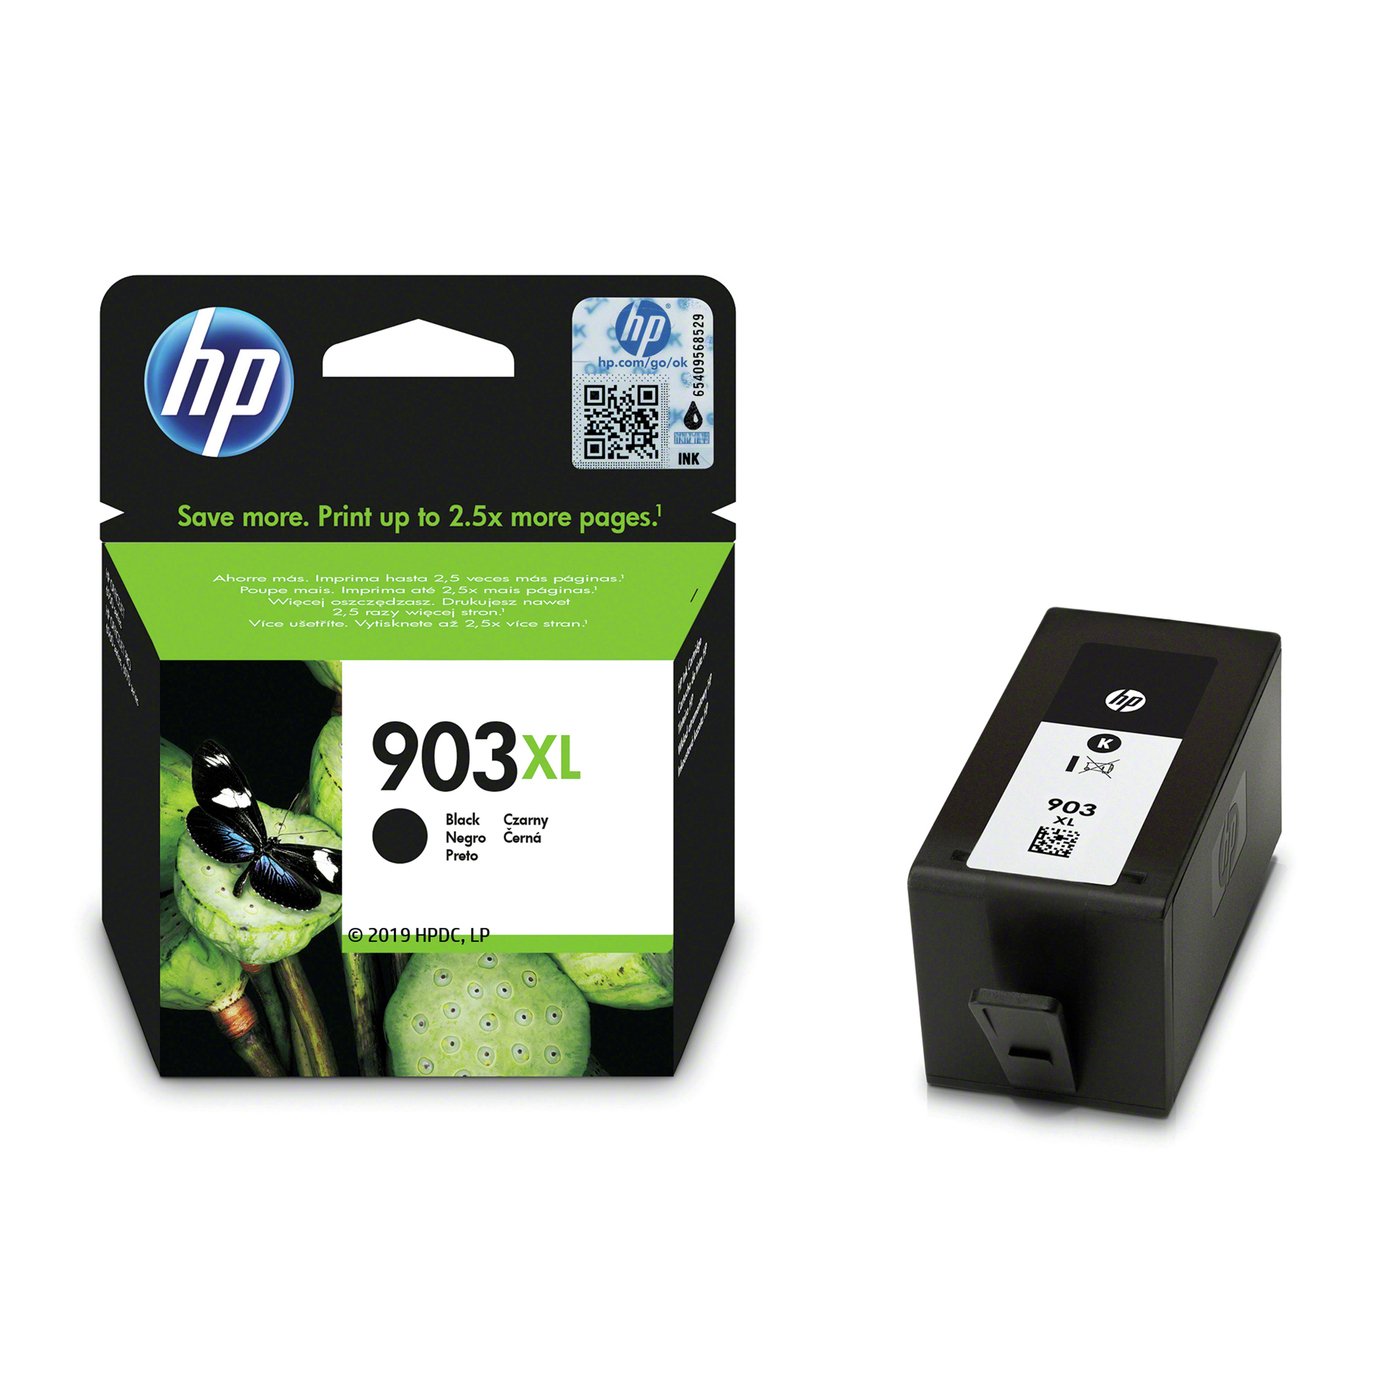 HP 903 XL High Yield Original Ink Cartridge Review